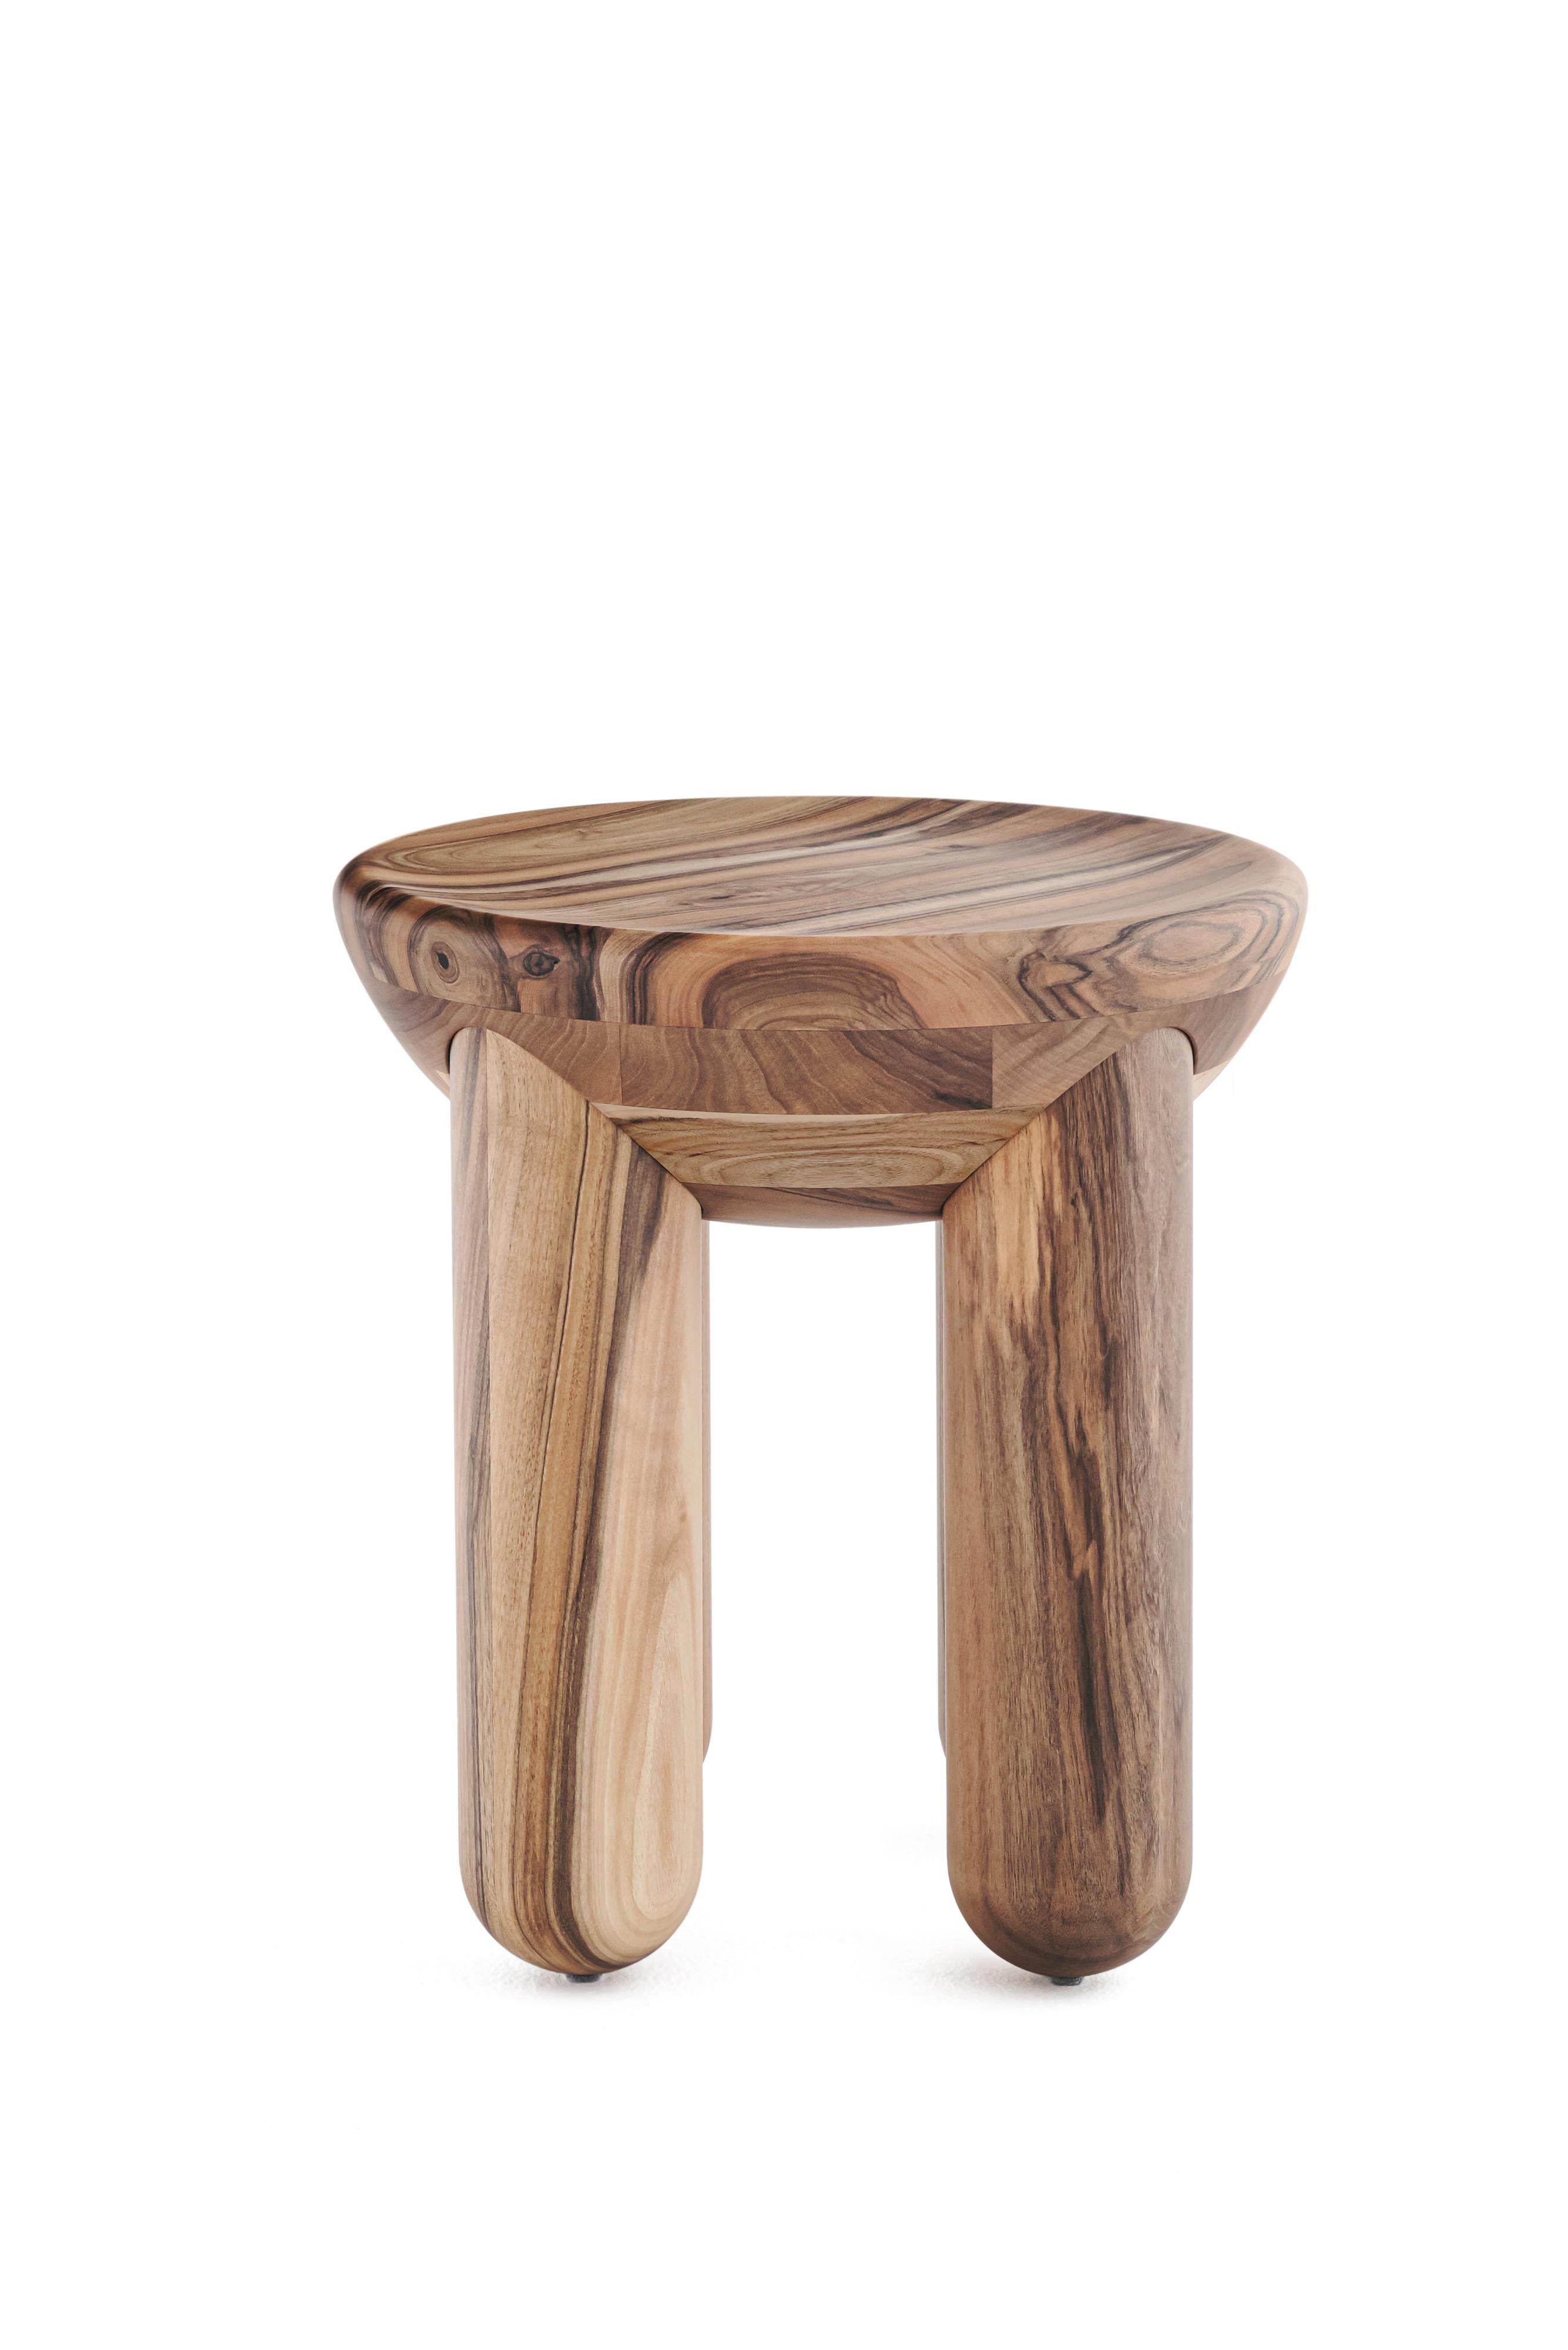 Modern Wooden Coffee Table Freyja 3 in Walnut Finish by Noom